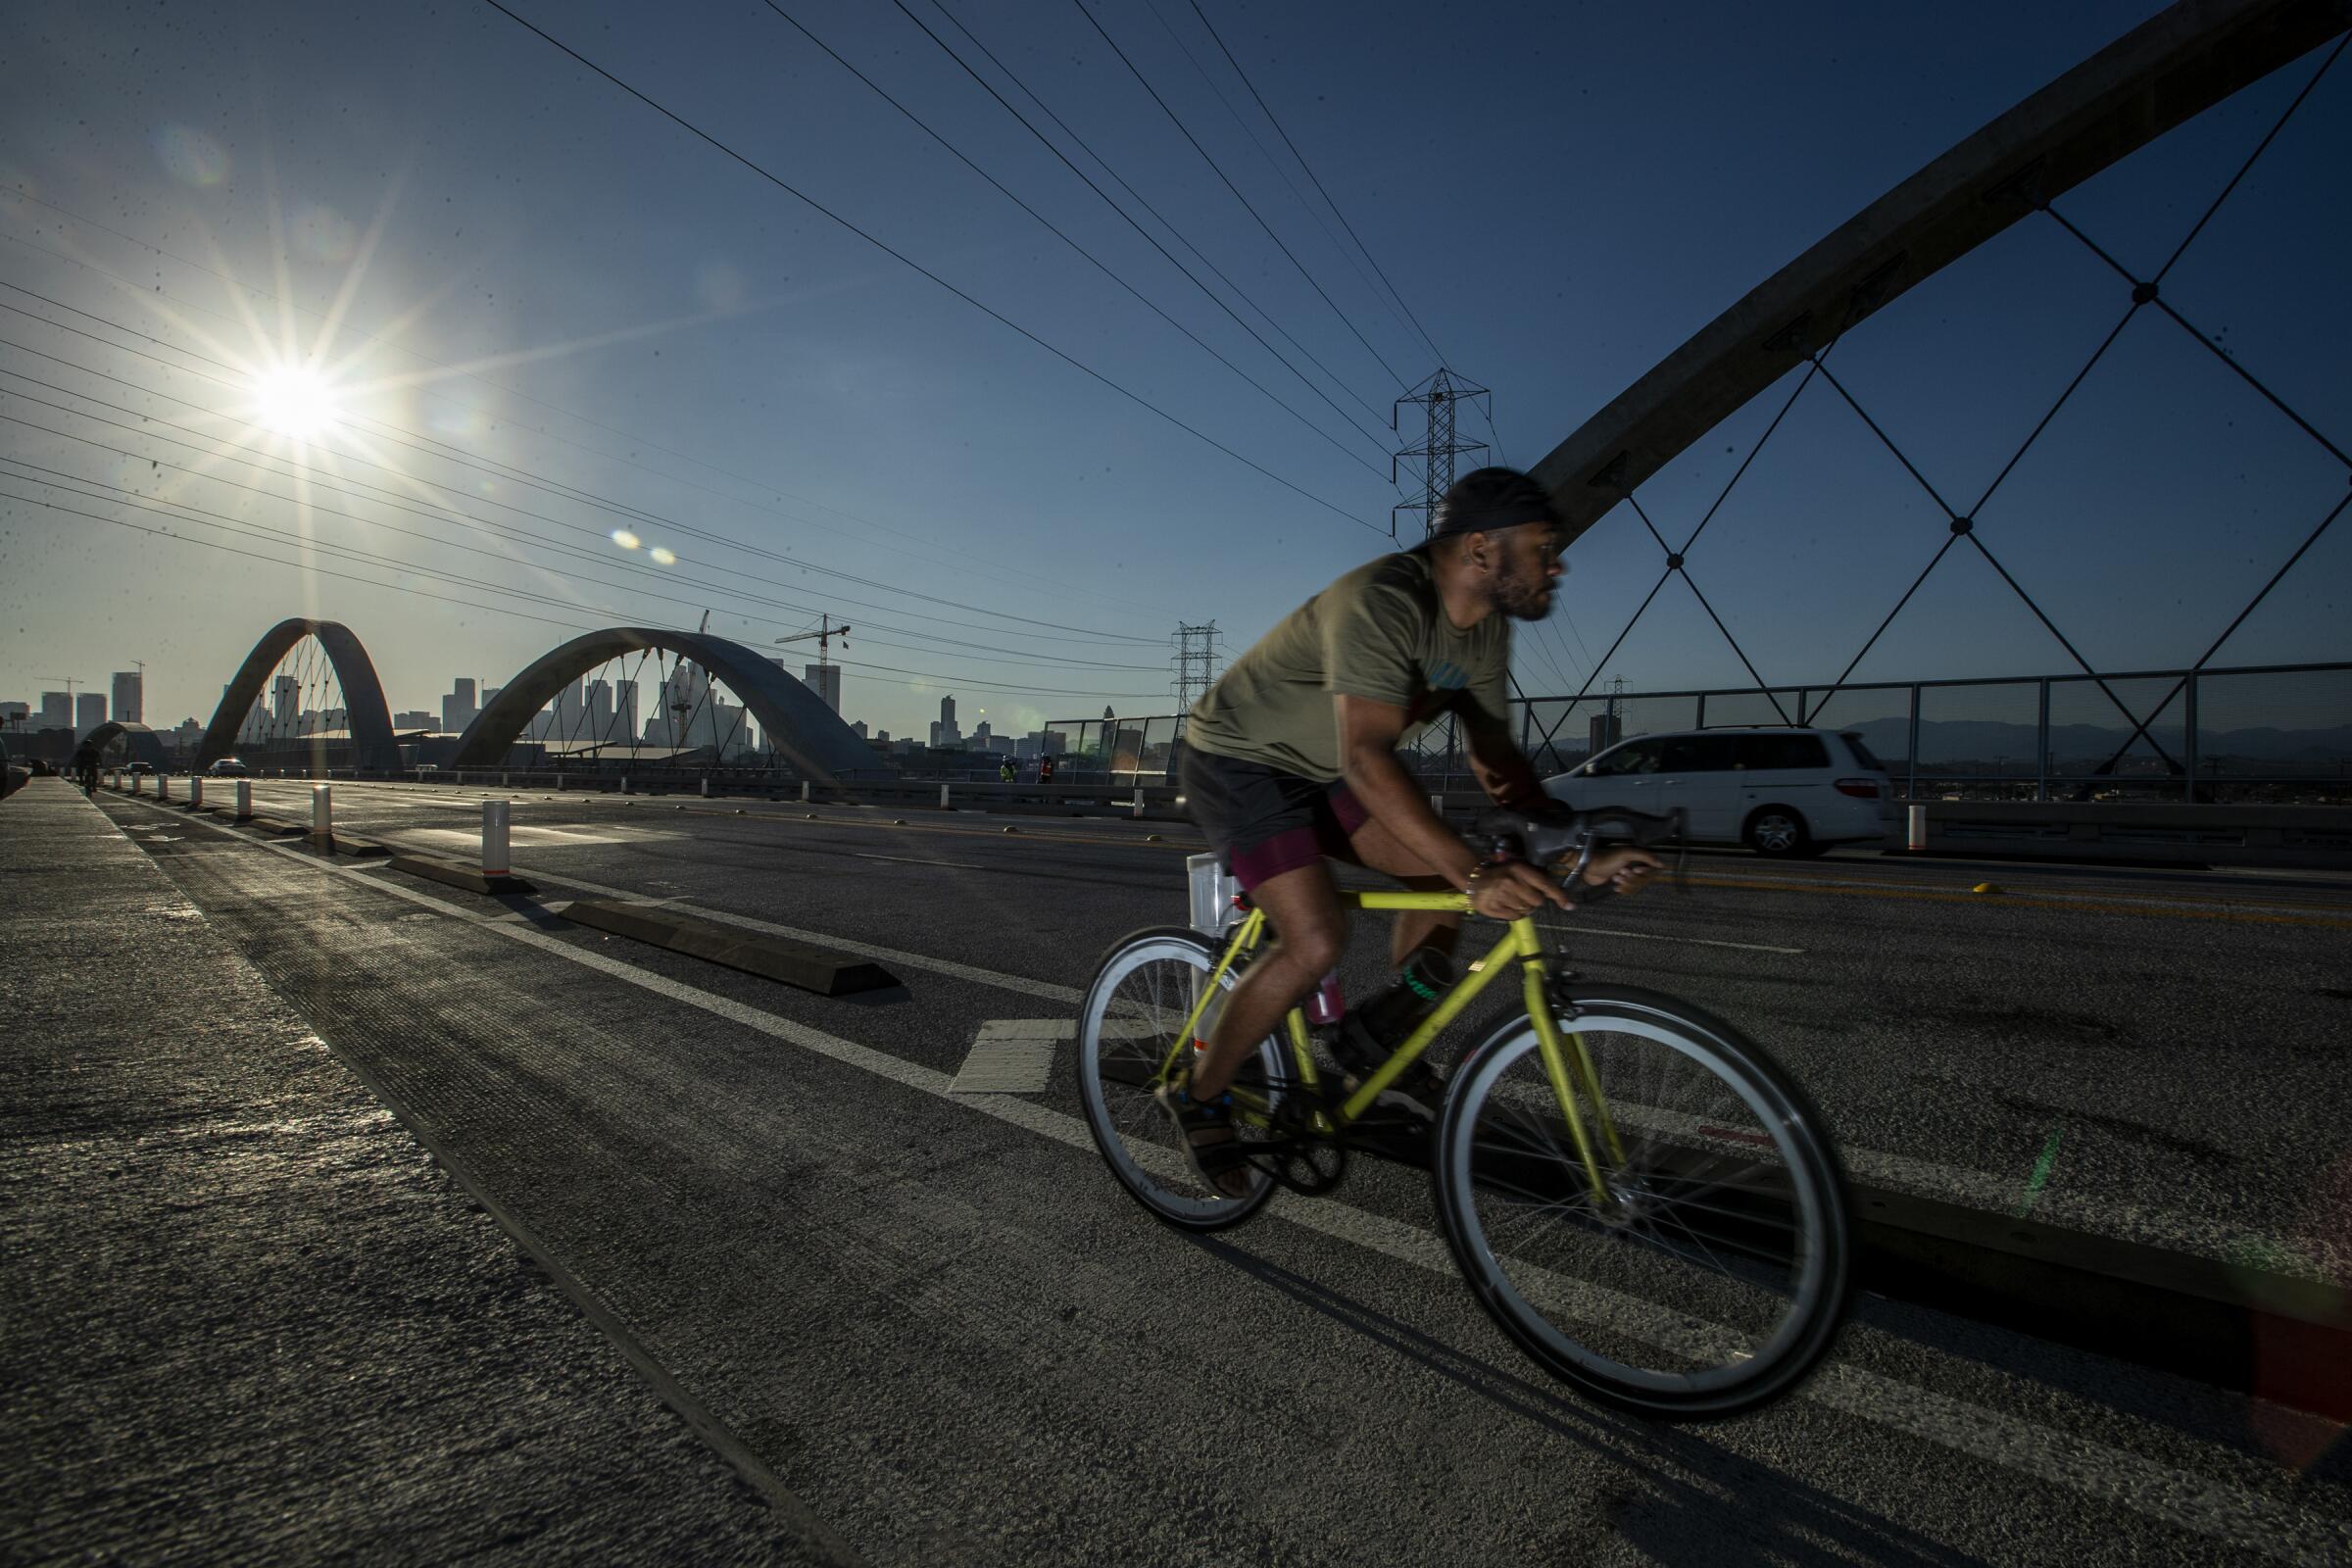 A cyclist riding a yellow bicycle across a bridge using the bike lane